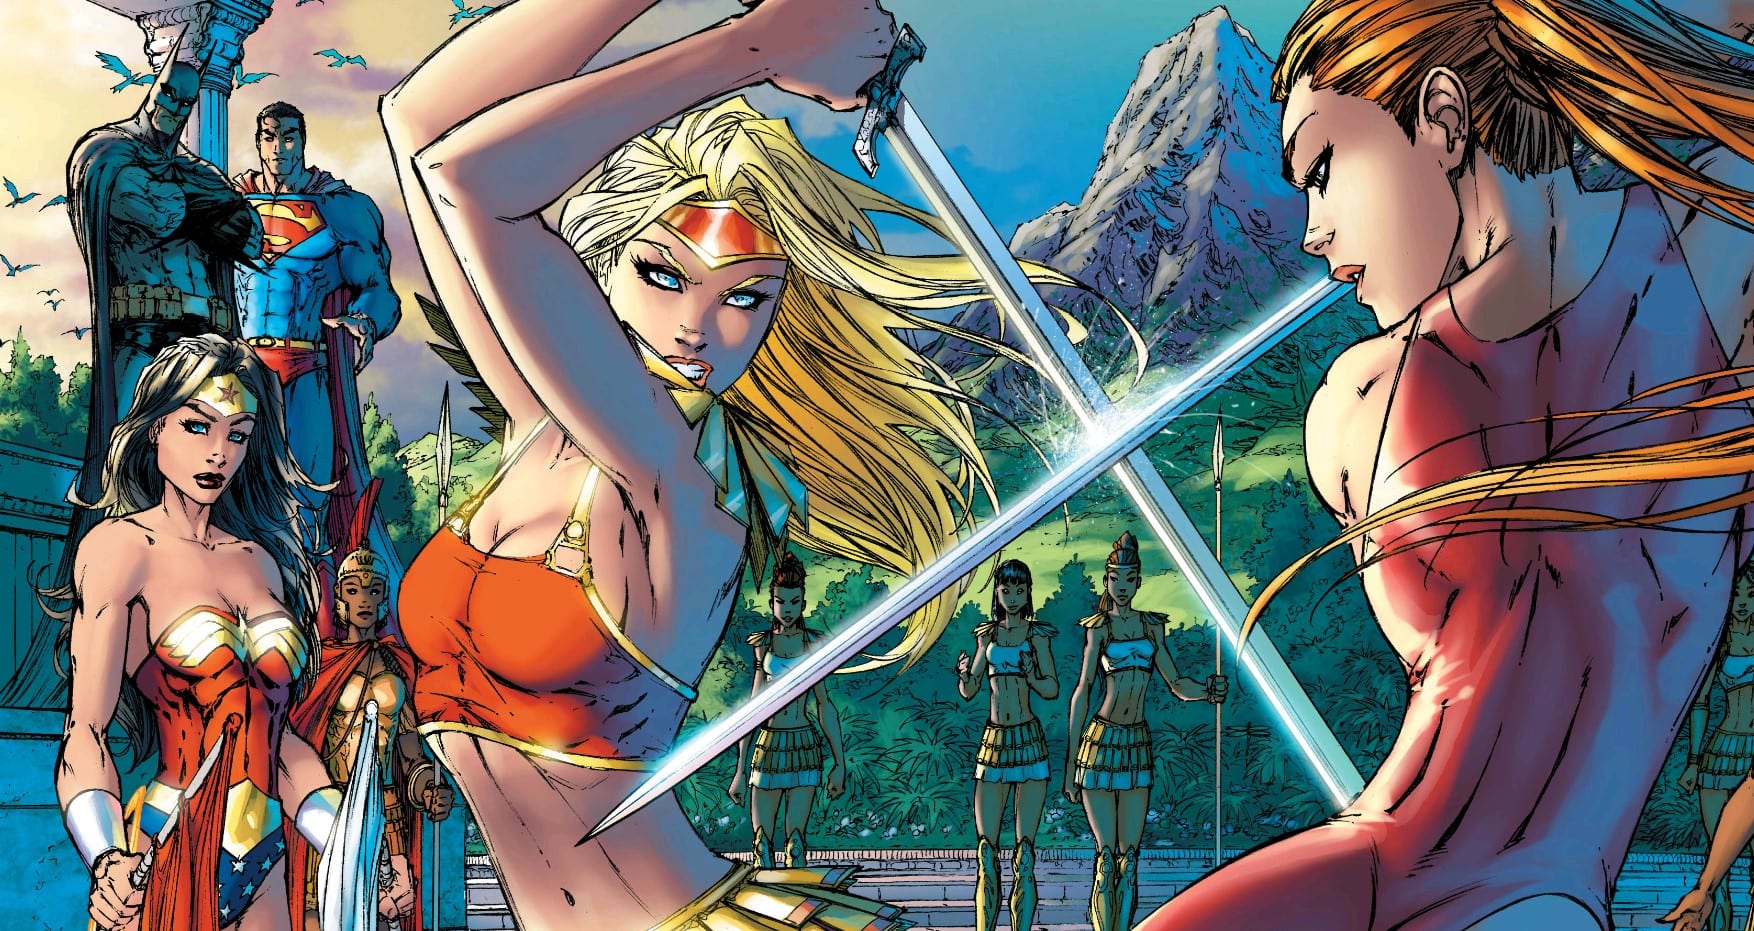 DC Comics Moves to Censor Iconic Comic Book Art.